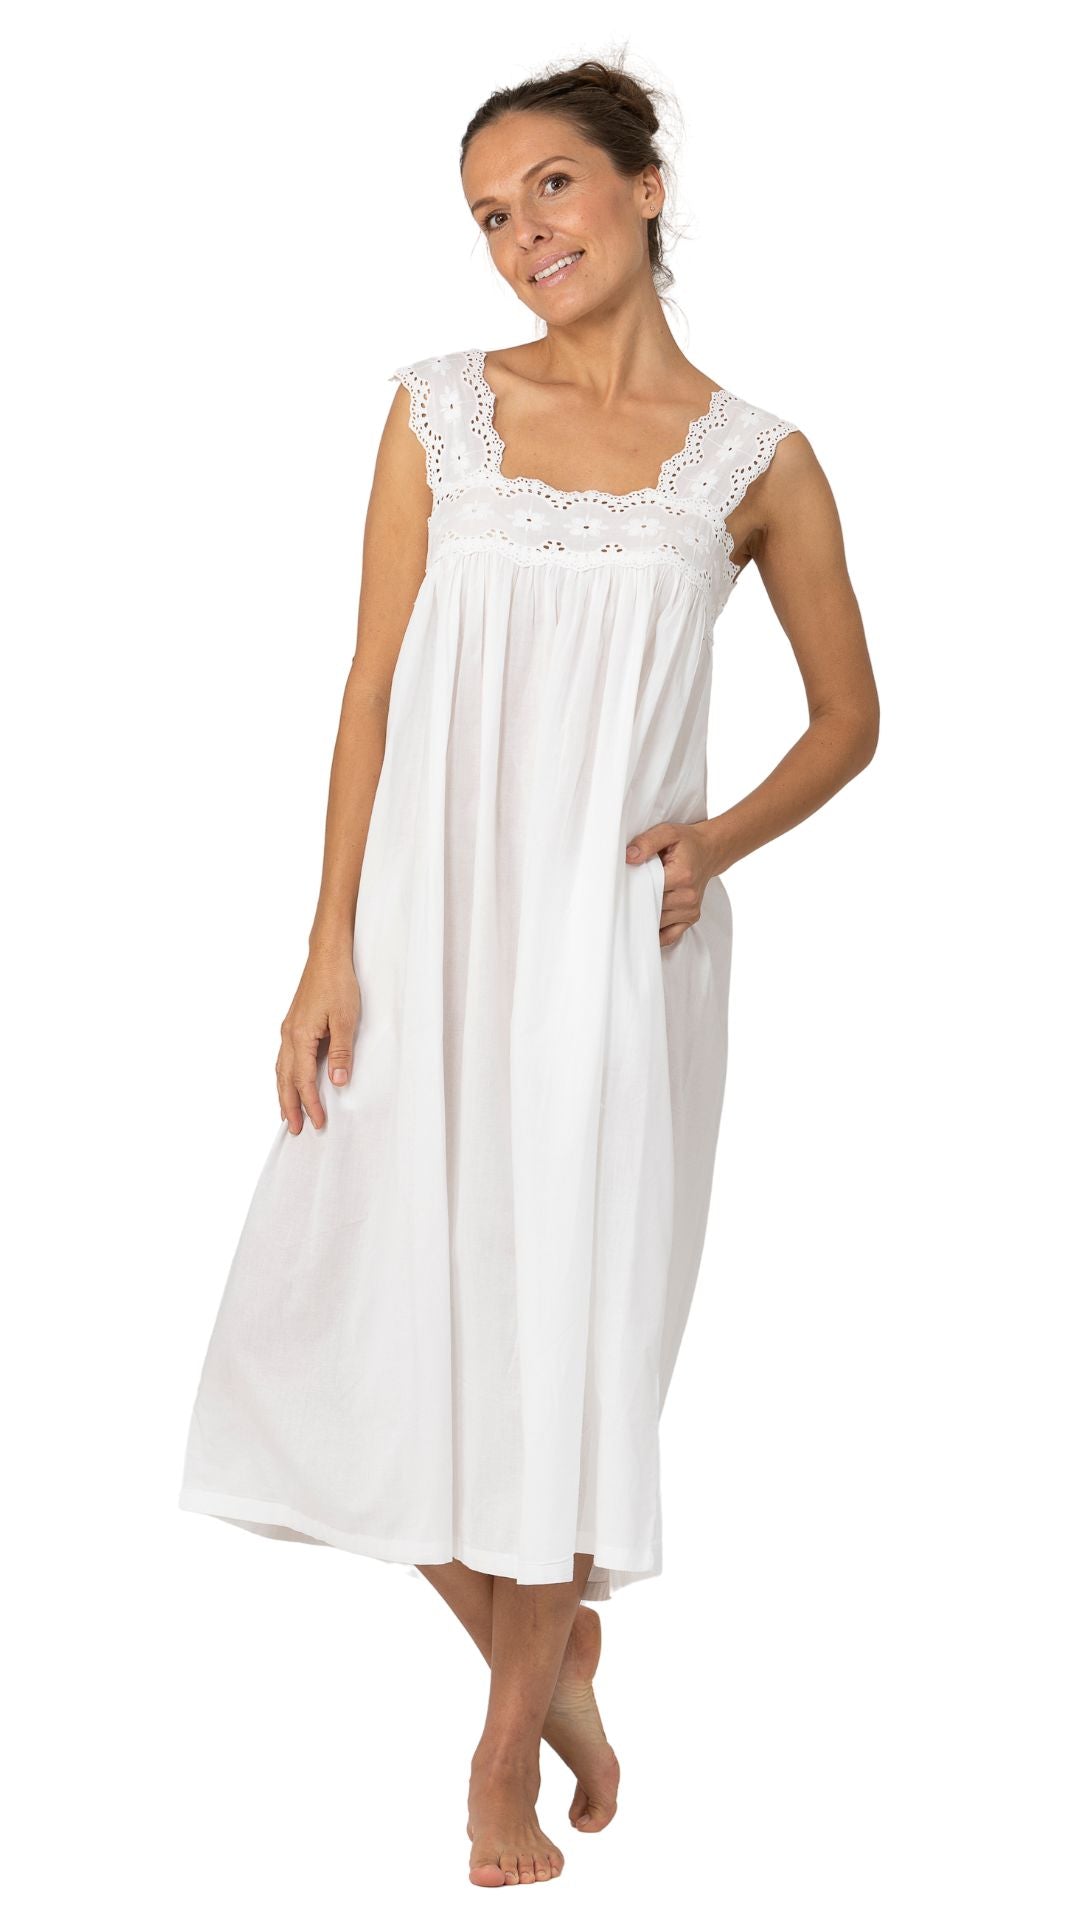 light cotton nightdress for women on model from Australia 